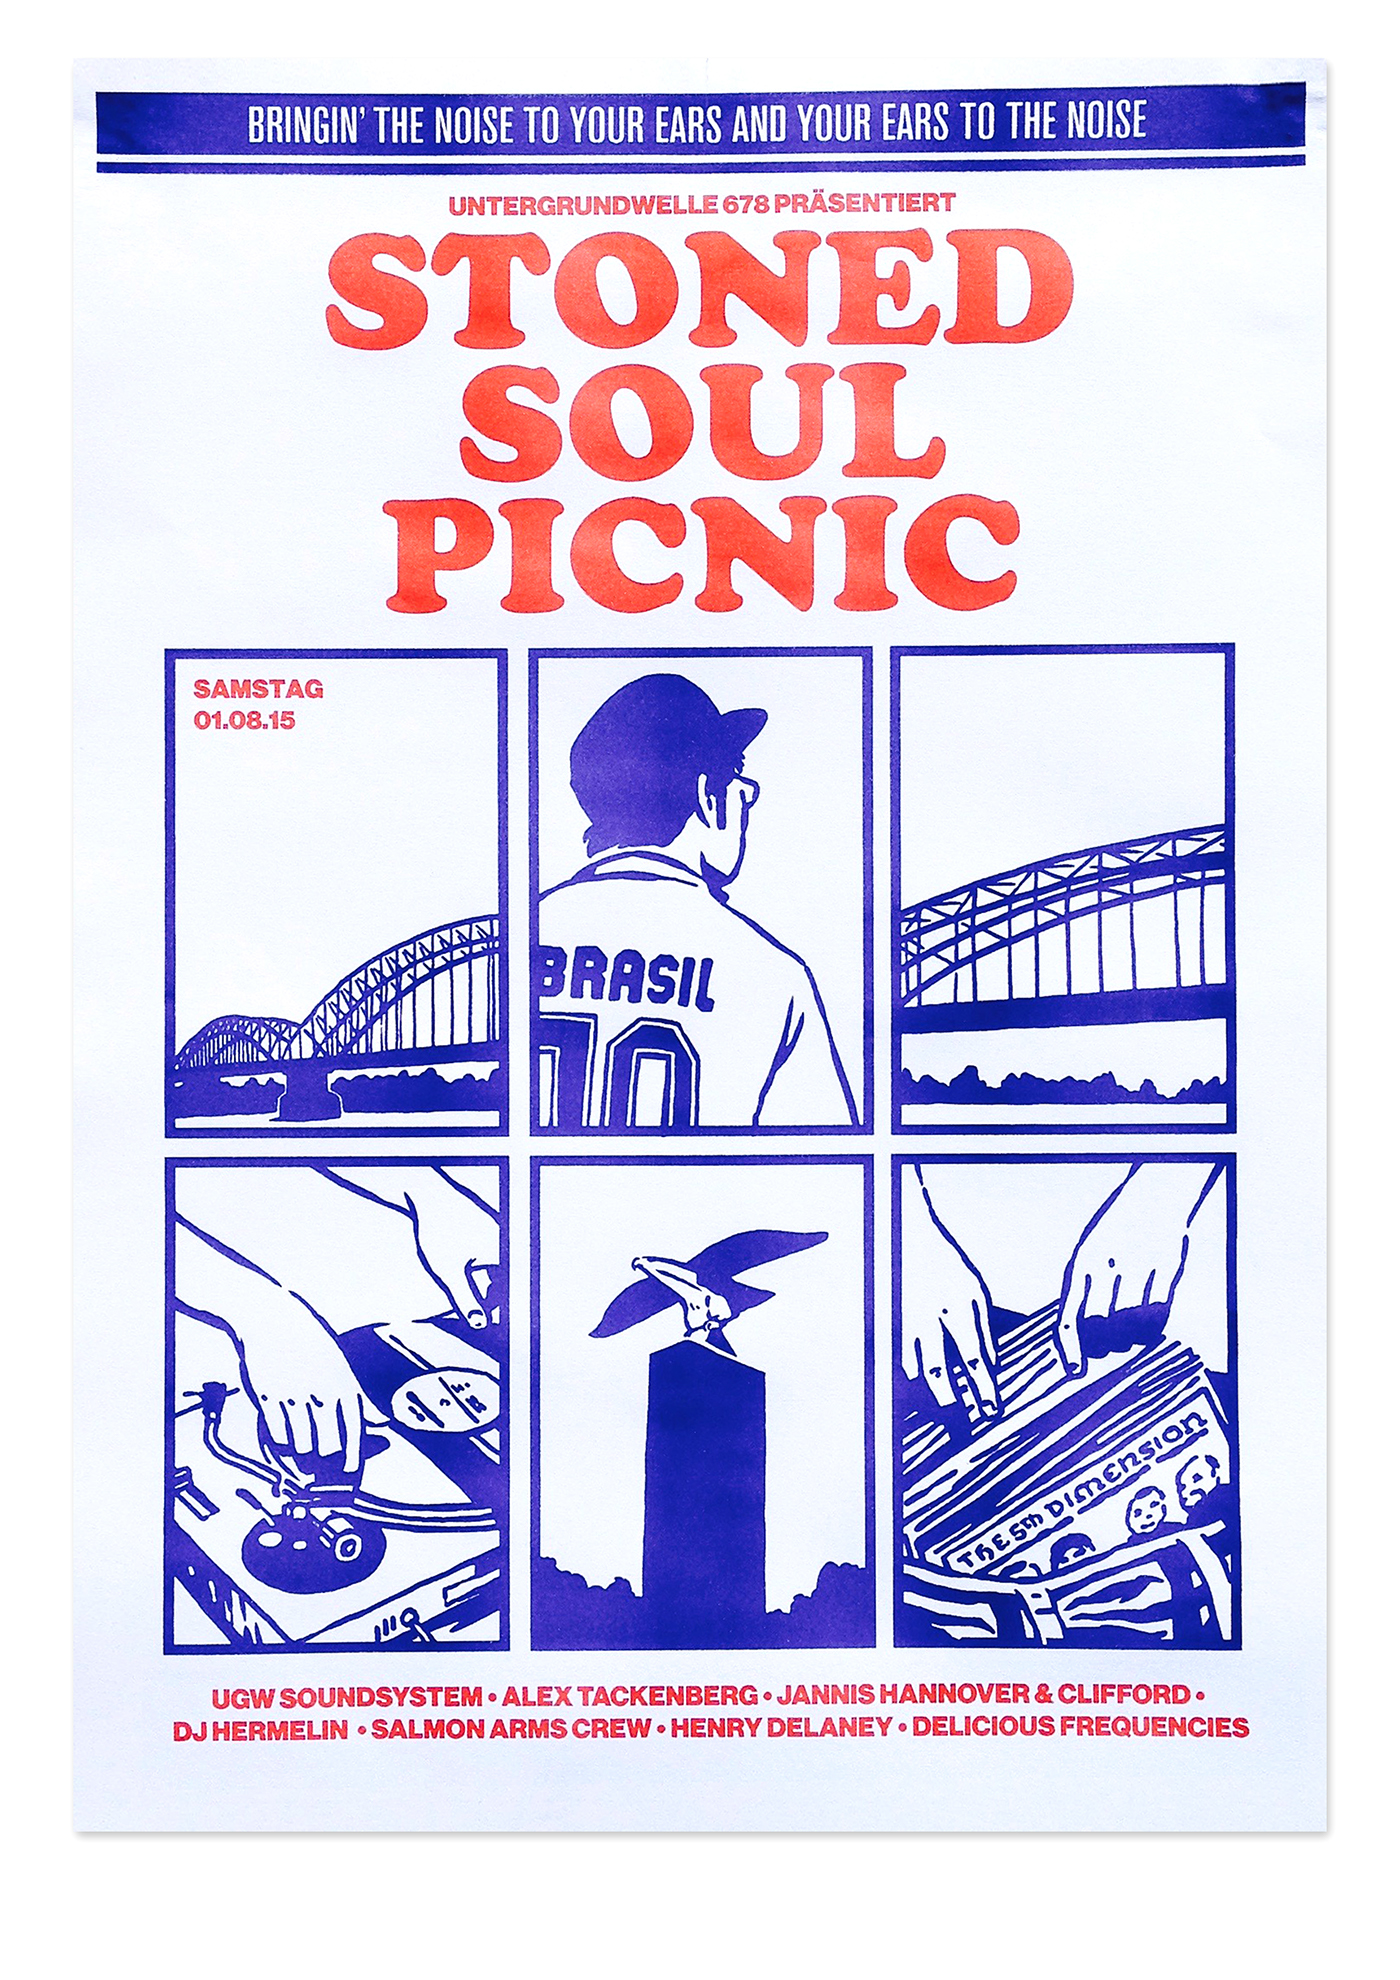 stoned soul picnic untergrundwelle 678 vinyl ugw 678 poster plakat cologne party soul Funk hiphop Riso risograph Risoprint technics